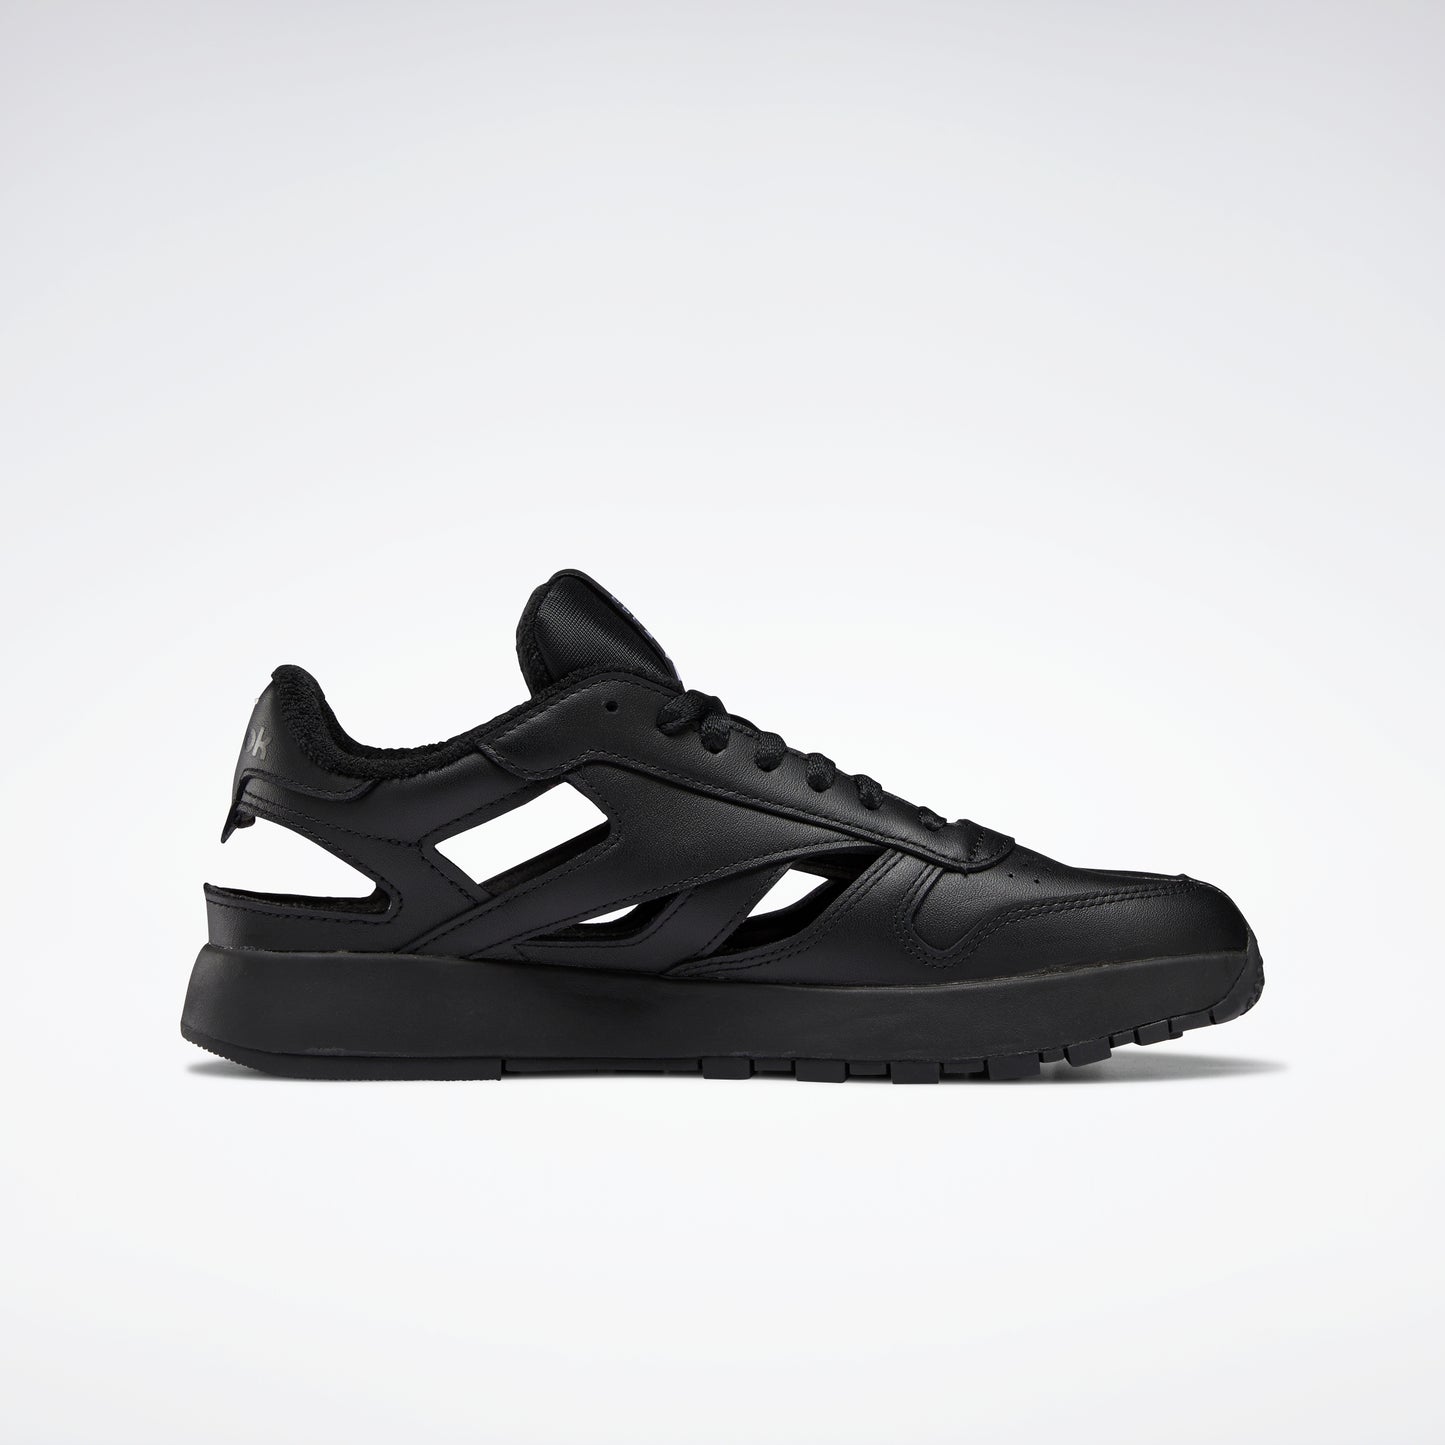 Reebok Footwear Men Maison Margiela Classic Leather Dq Shoes Black/Ftwwht/Black